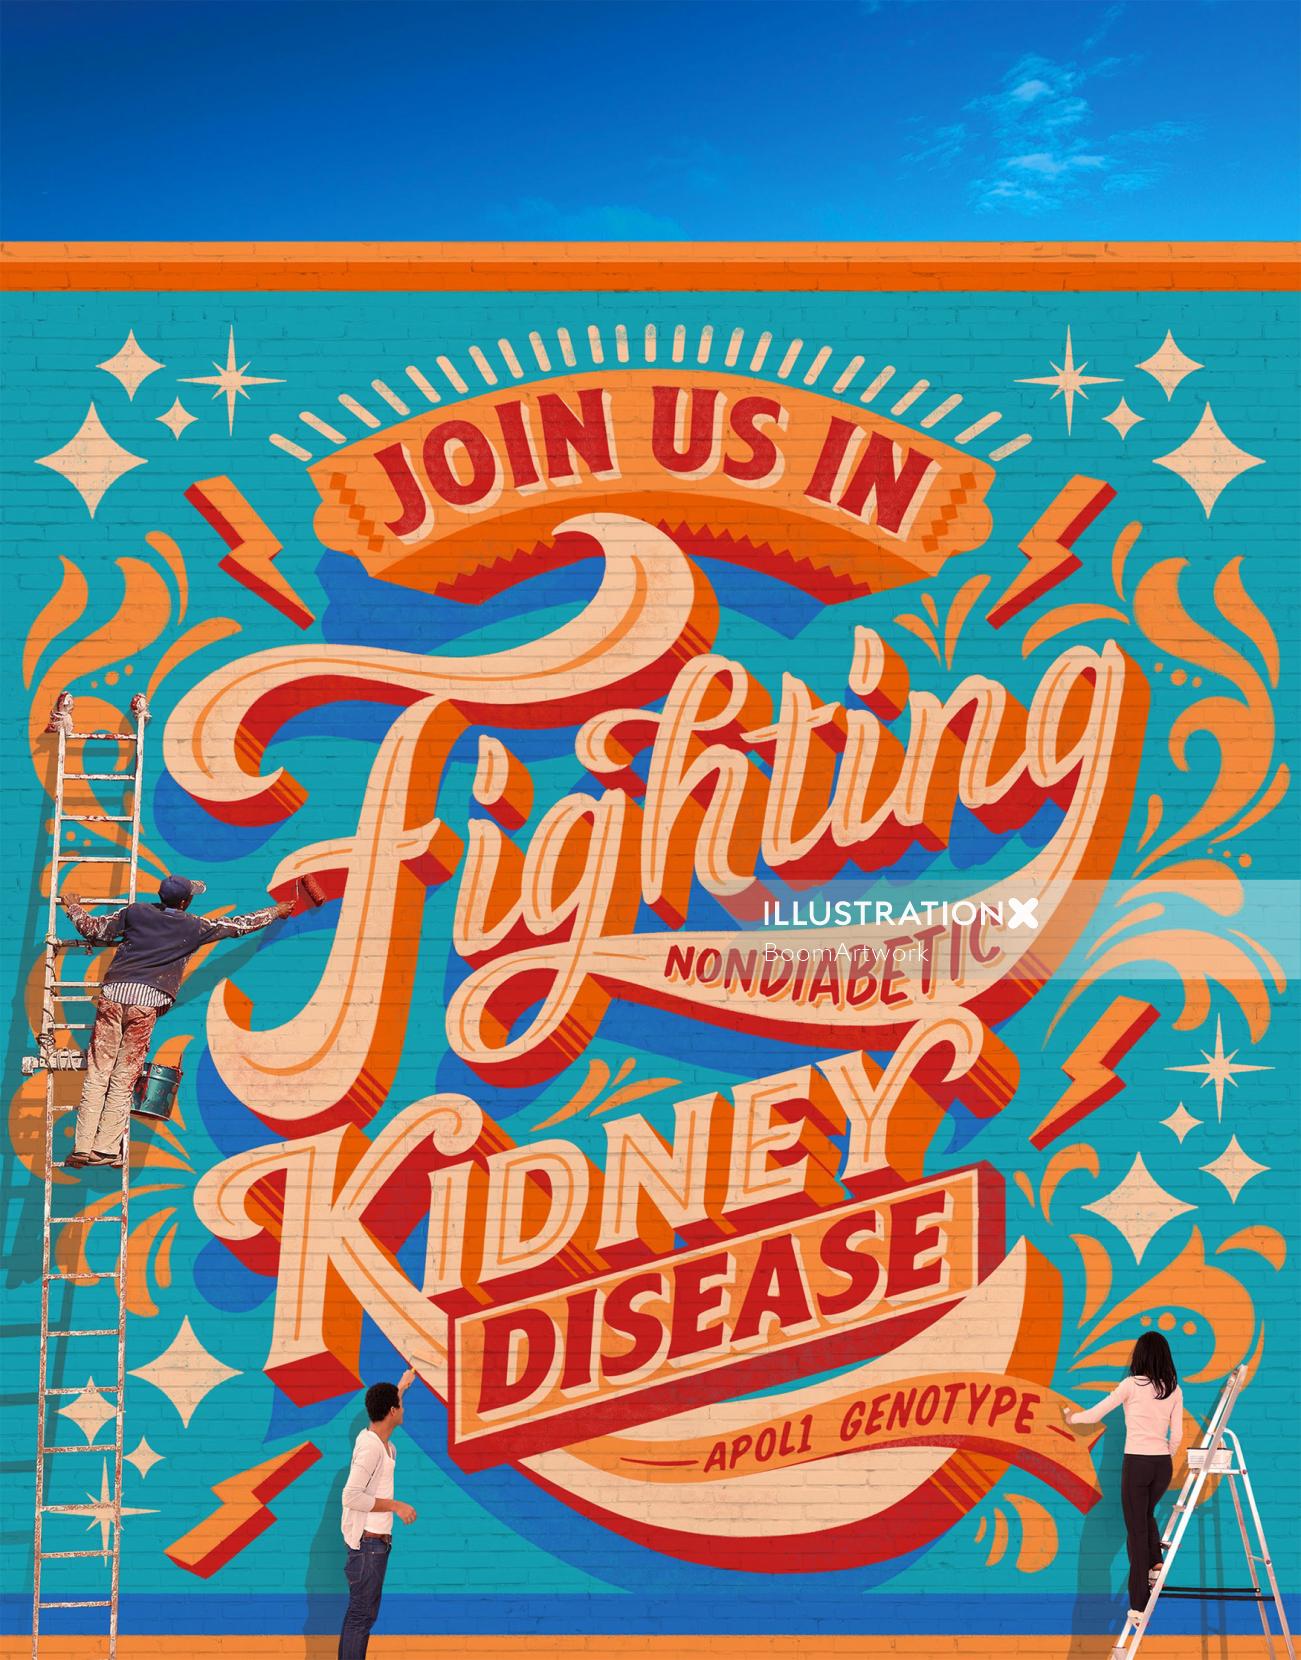 Lettering illustration of Fighting Kidney Disease